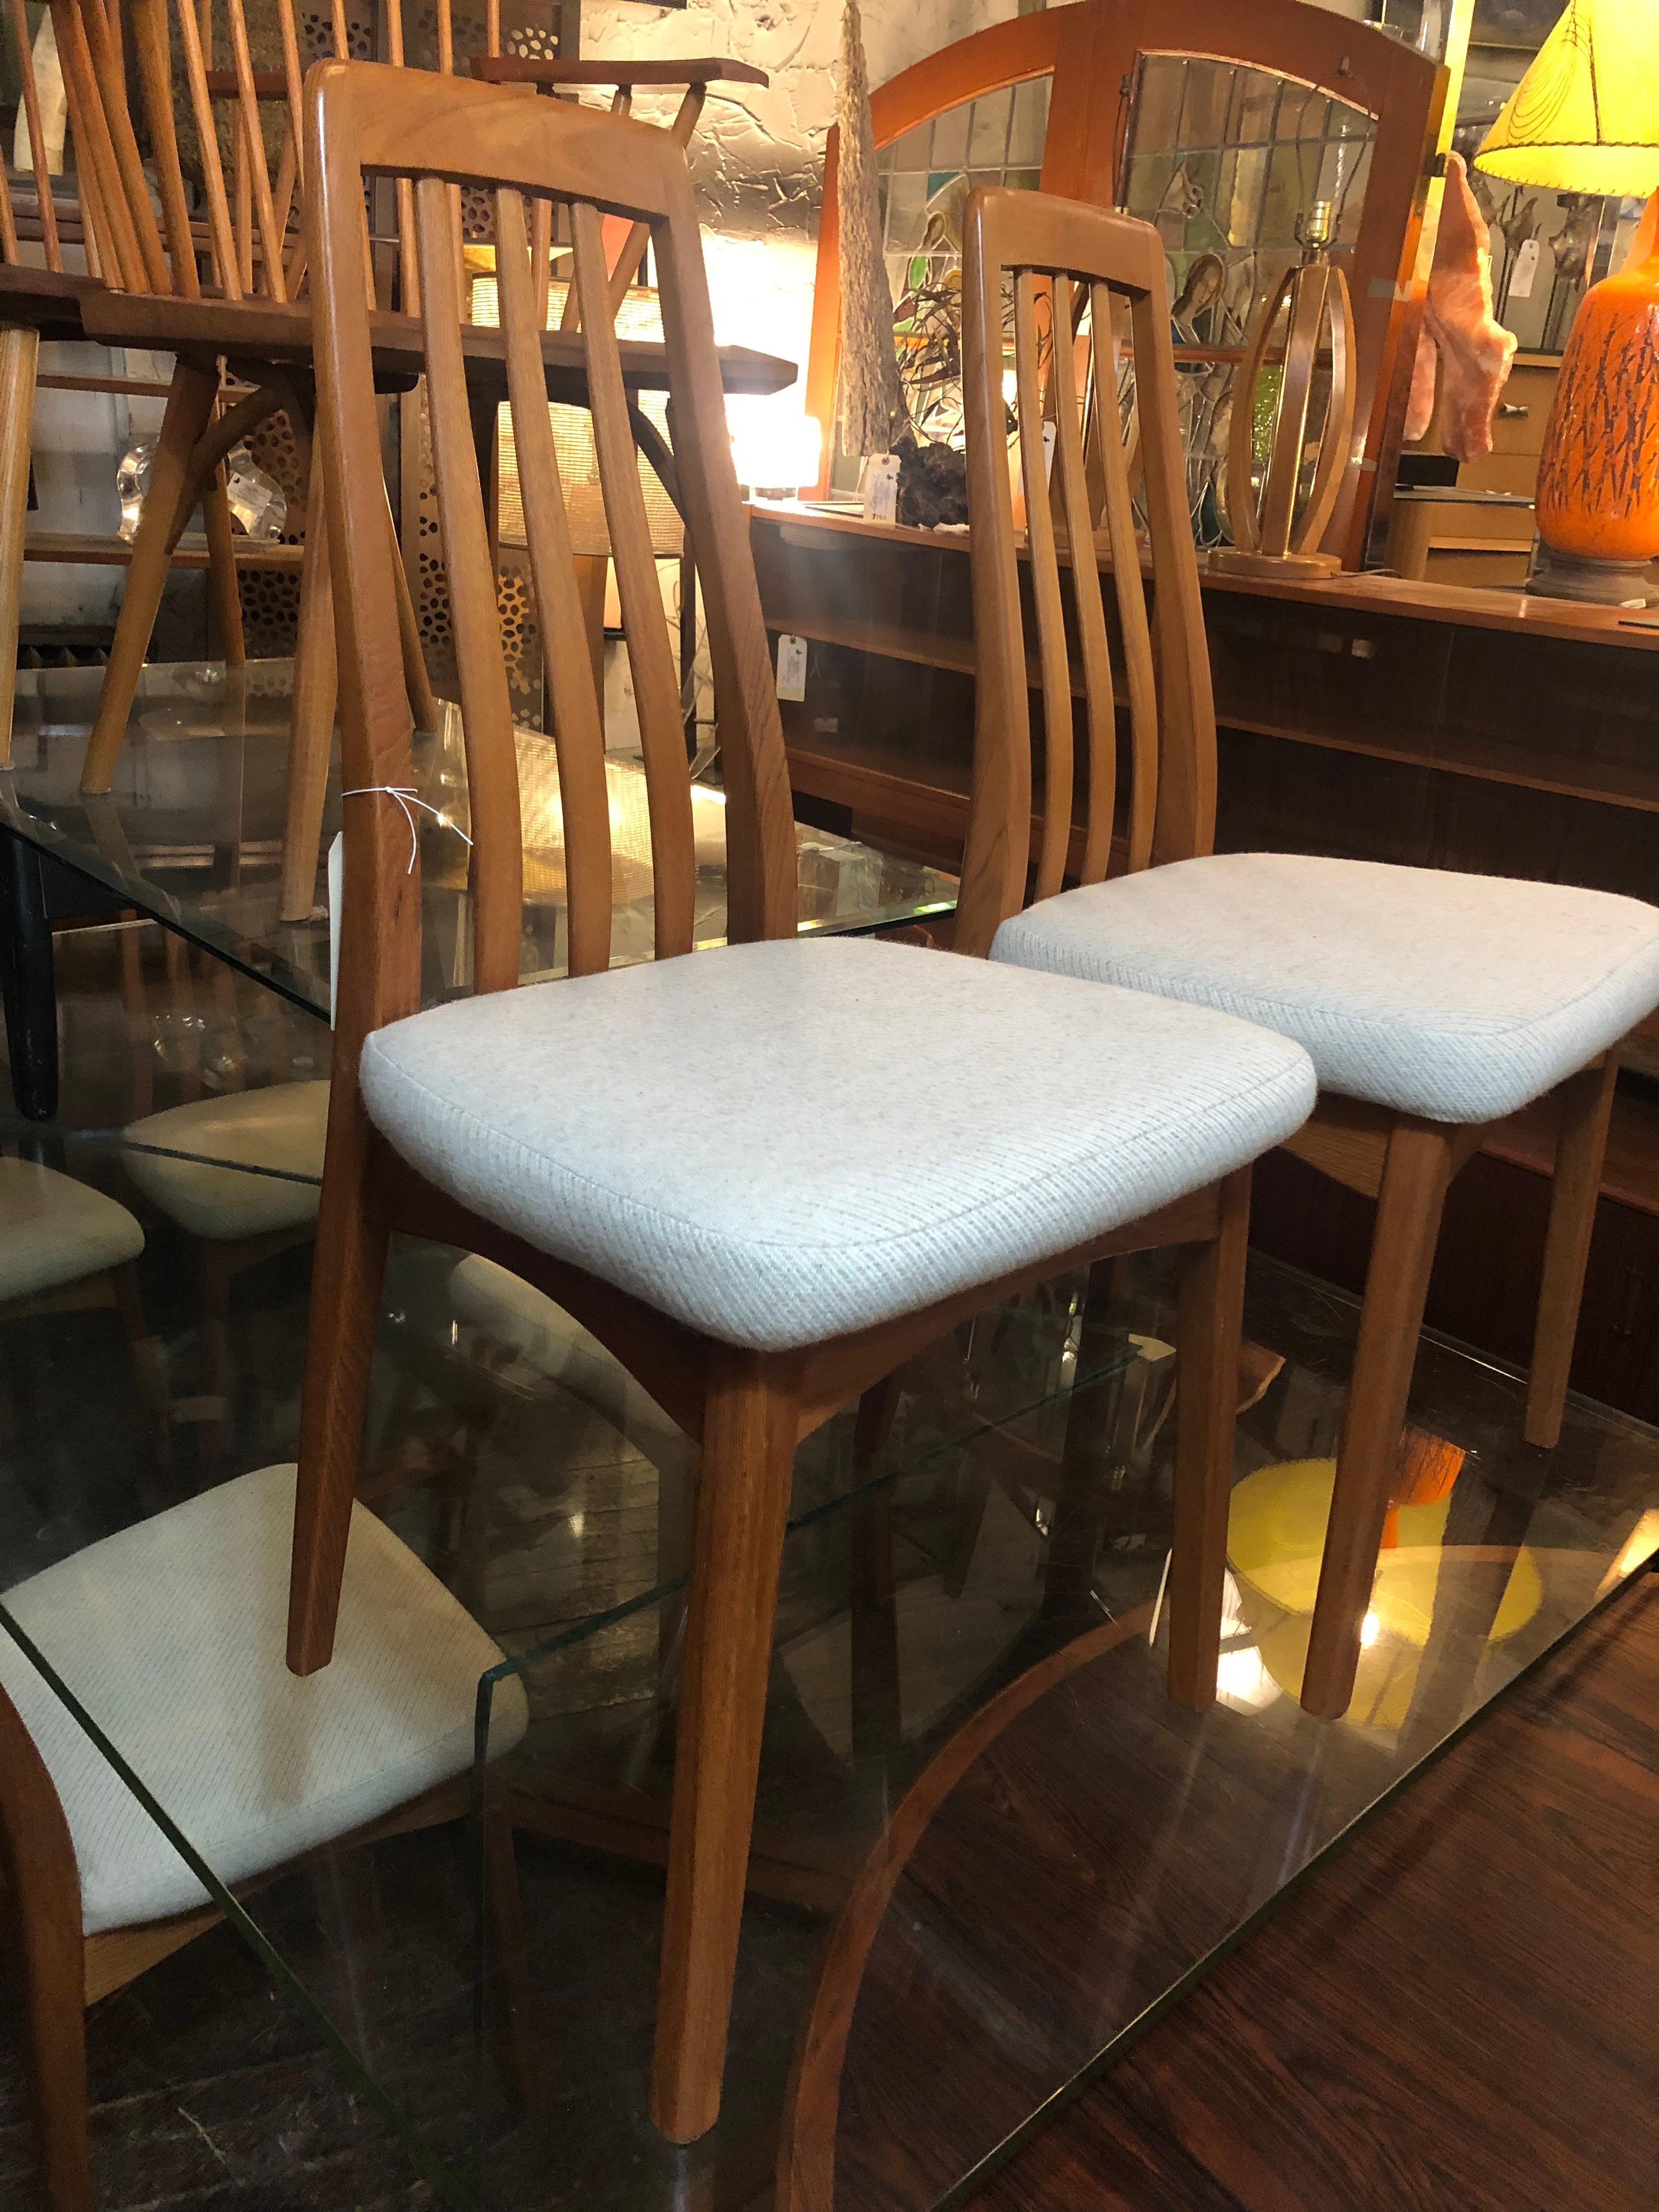 Set of six Danish mid-century slat chairs. Warm teak wood grain with off white cushions.
Please confirm item location (NY or NJ).
